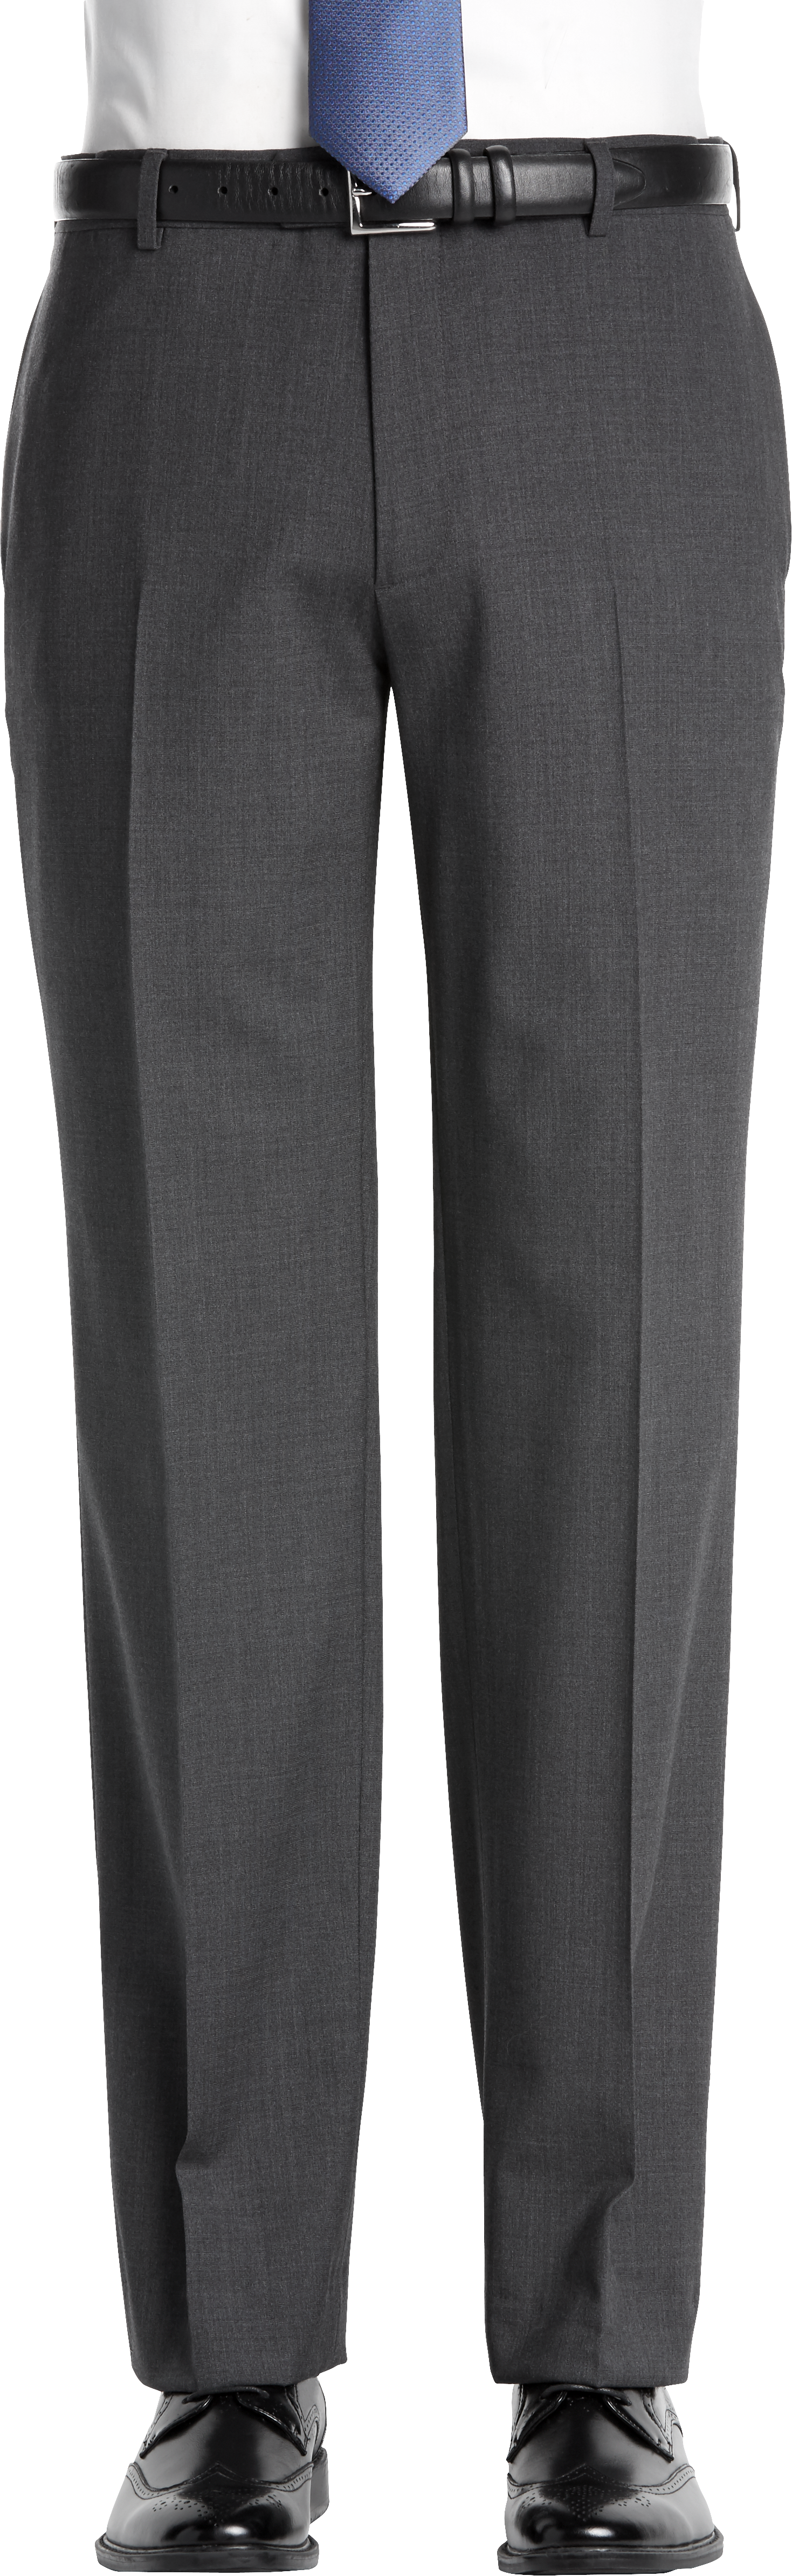 Egara Charcoal Slim Fit Pants - Men's Sale | Men's Wearhouse